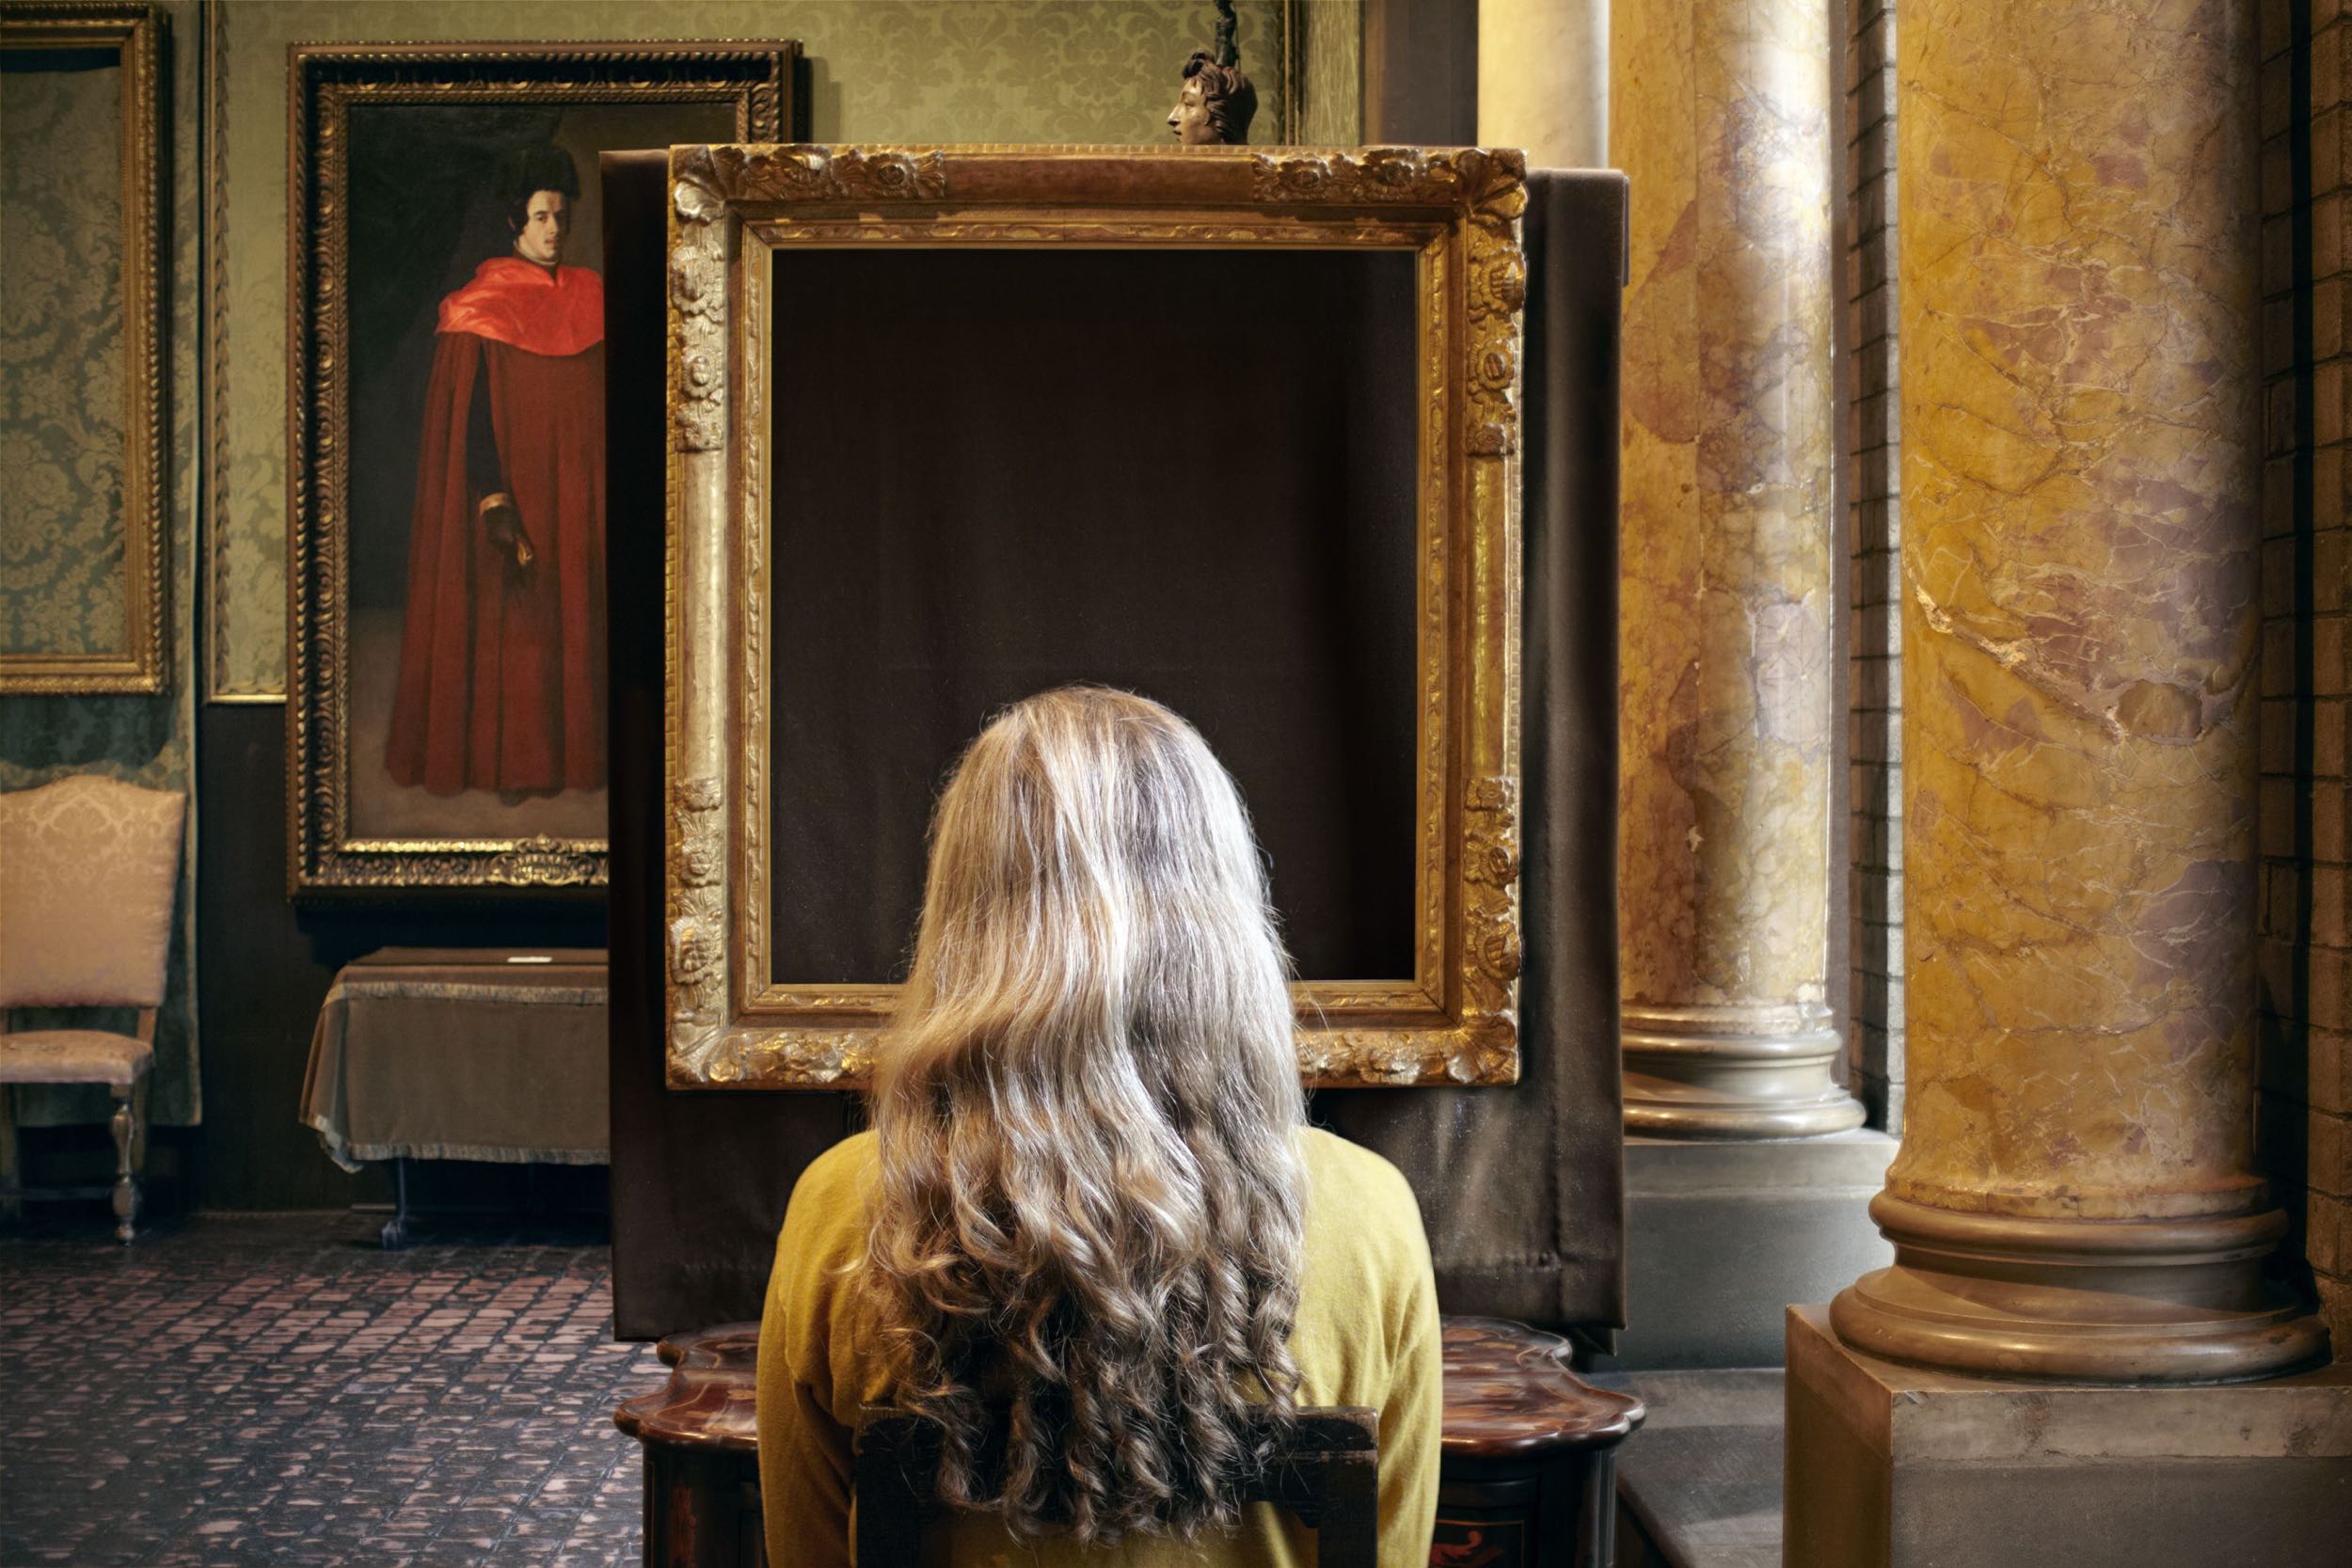 Sophie Calle. Que voyez-vous ? Le concert. Vermeer [Què hi veieu ? El concert. Vermeer], 2013 (detall) © Sophie Calle/ADAGP, Paris, 2015. Courtesy Galerie Perrotin and Paula Cooper Gallery